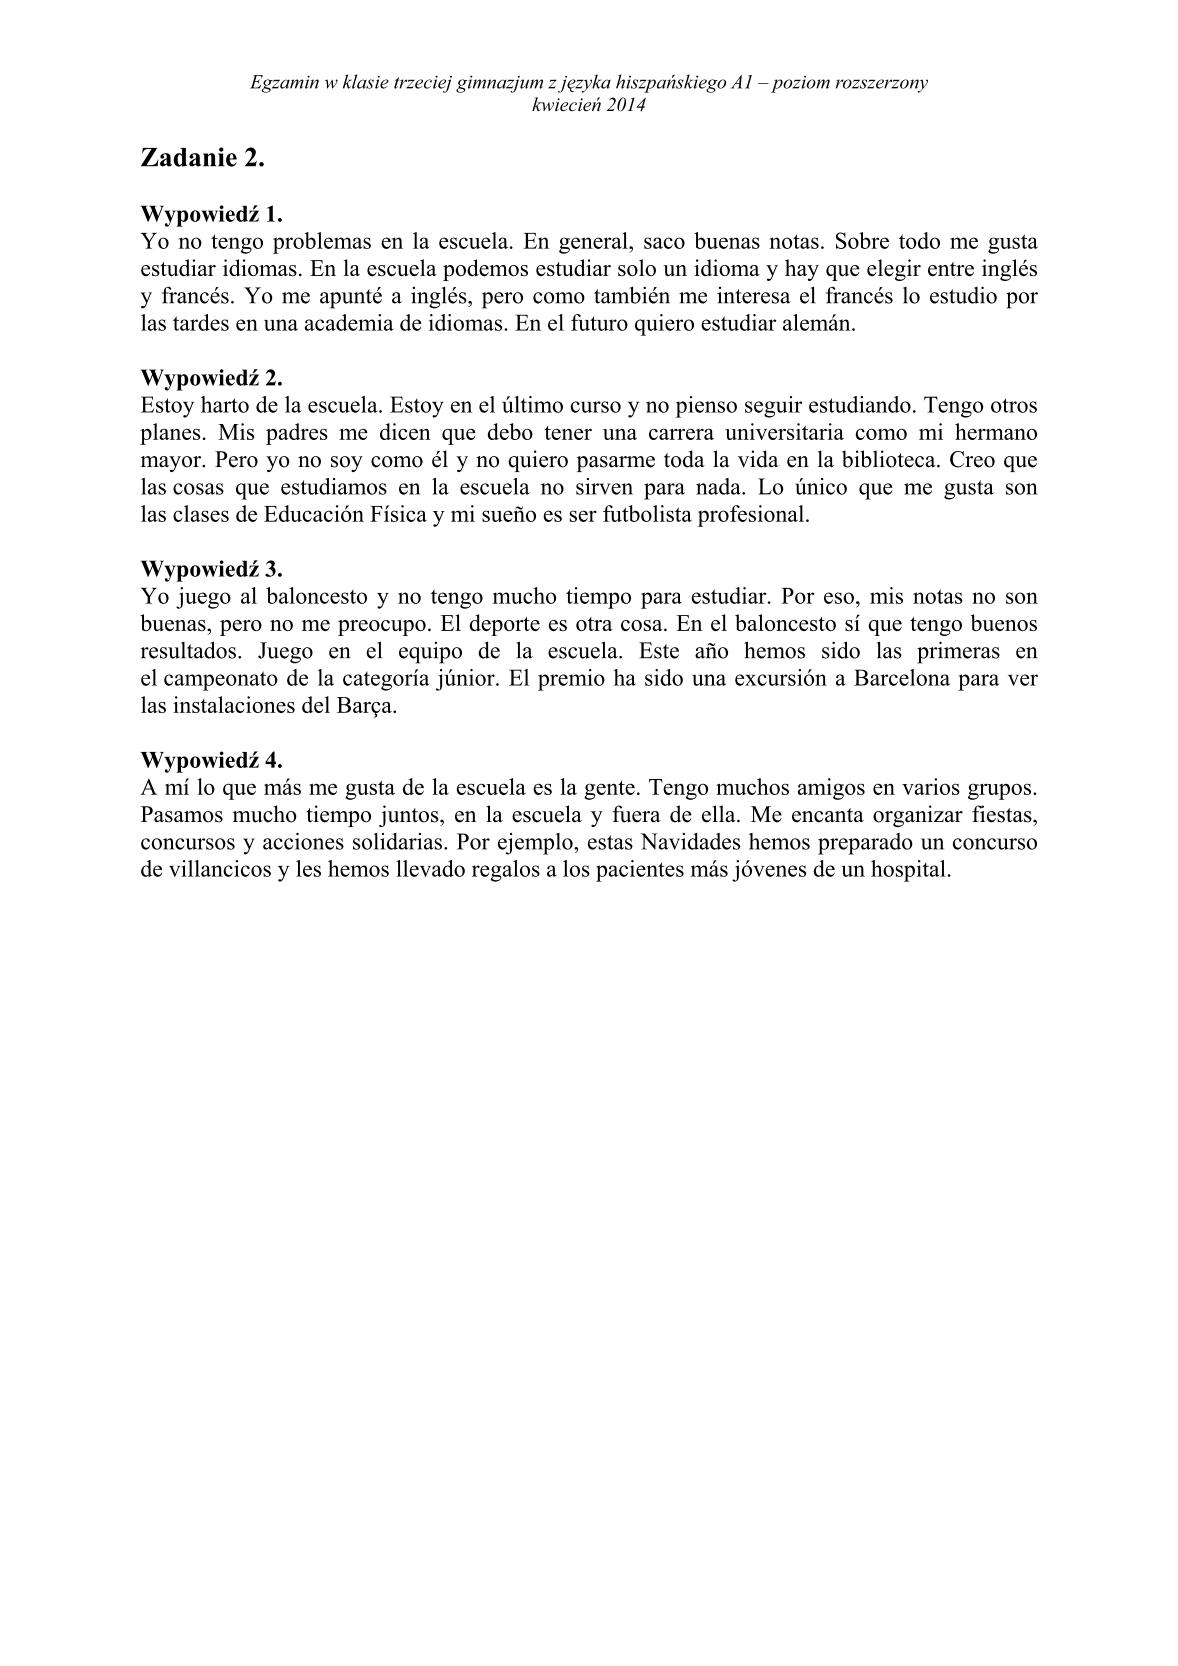 transkrypcja-hiszpanski-poziom-rozszerzony-egzamin-gimnazjalny-25.04.2014-2